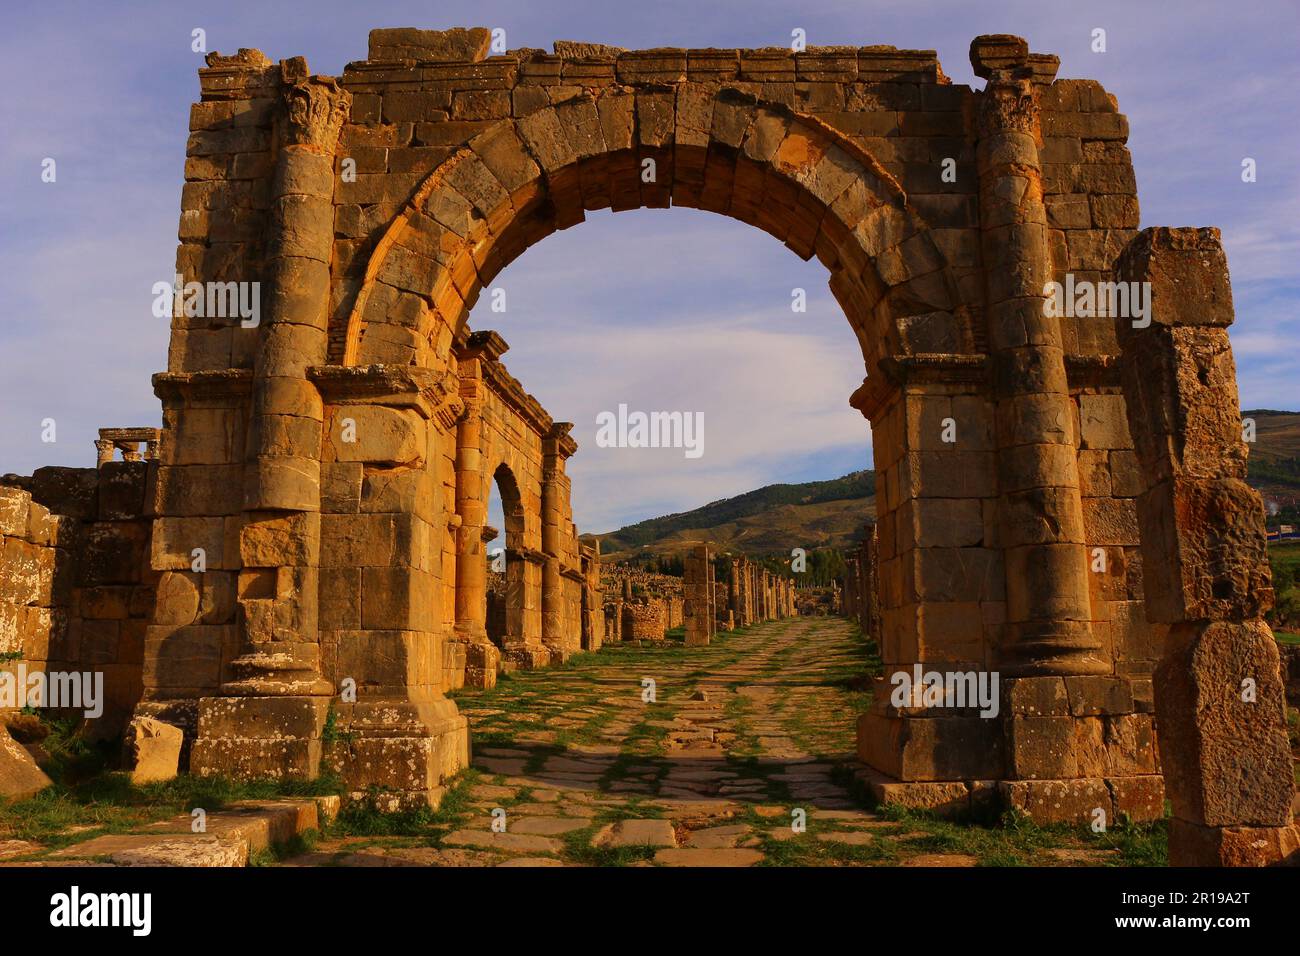 Djemila roman ruins, Algeria. Cardo maximus arc in the evening. Stock Photo